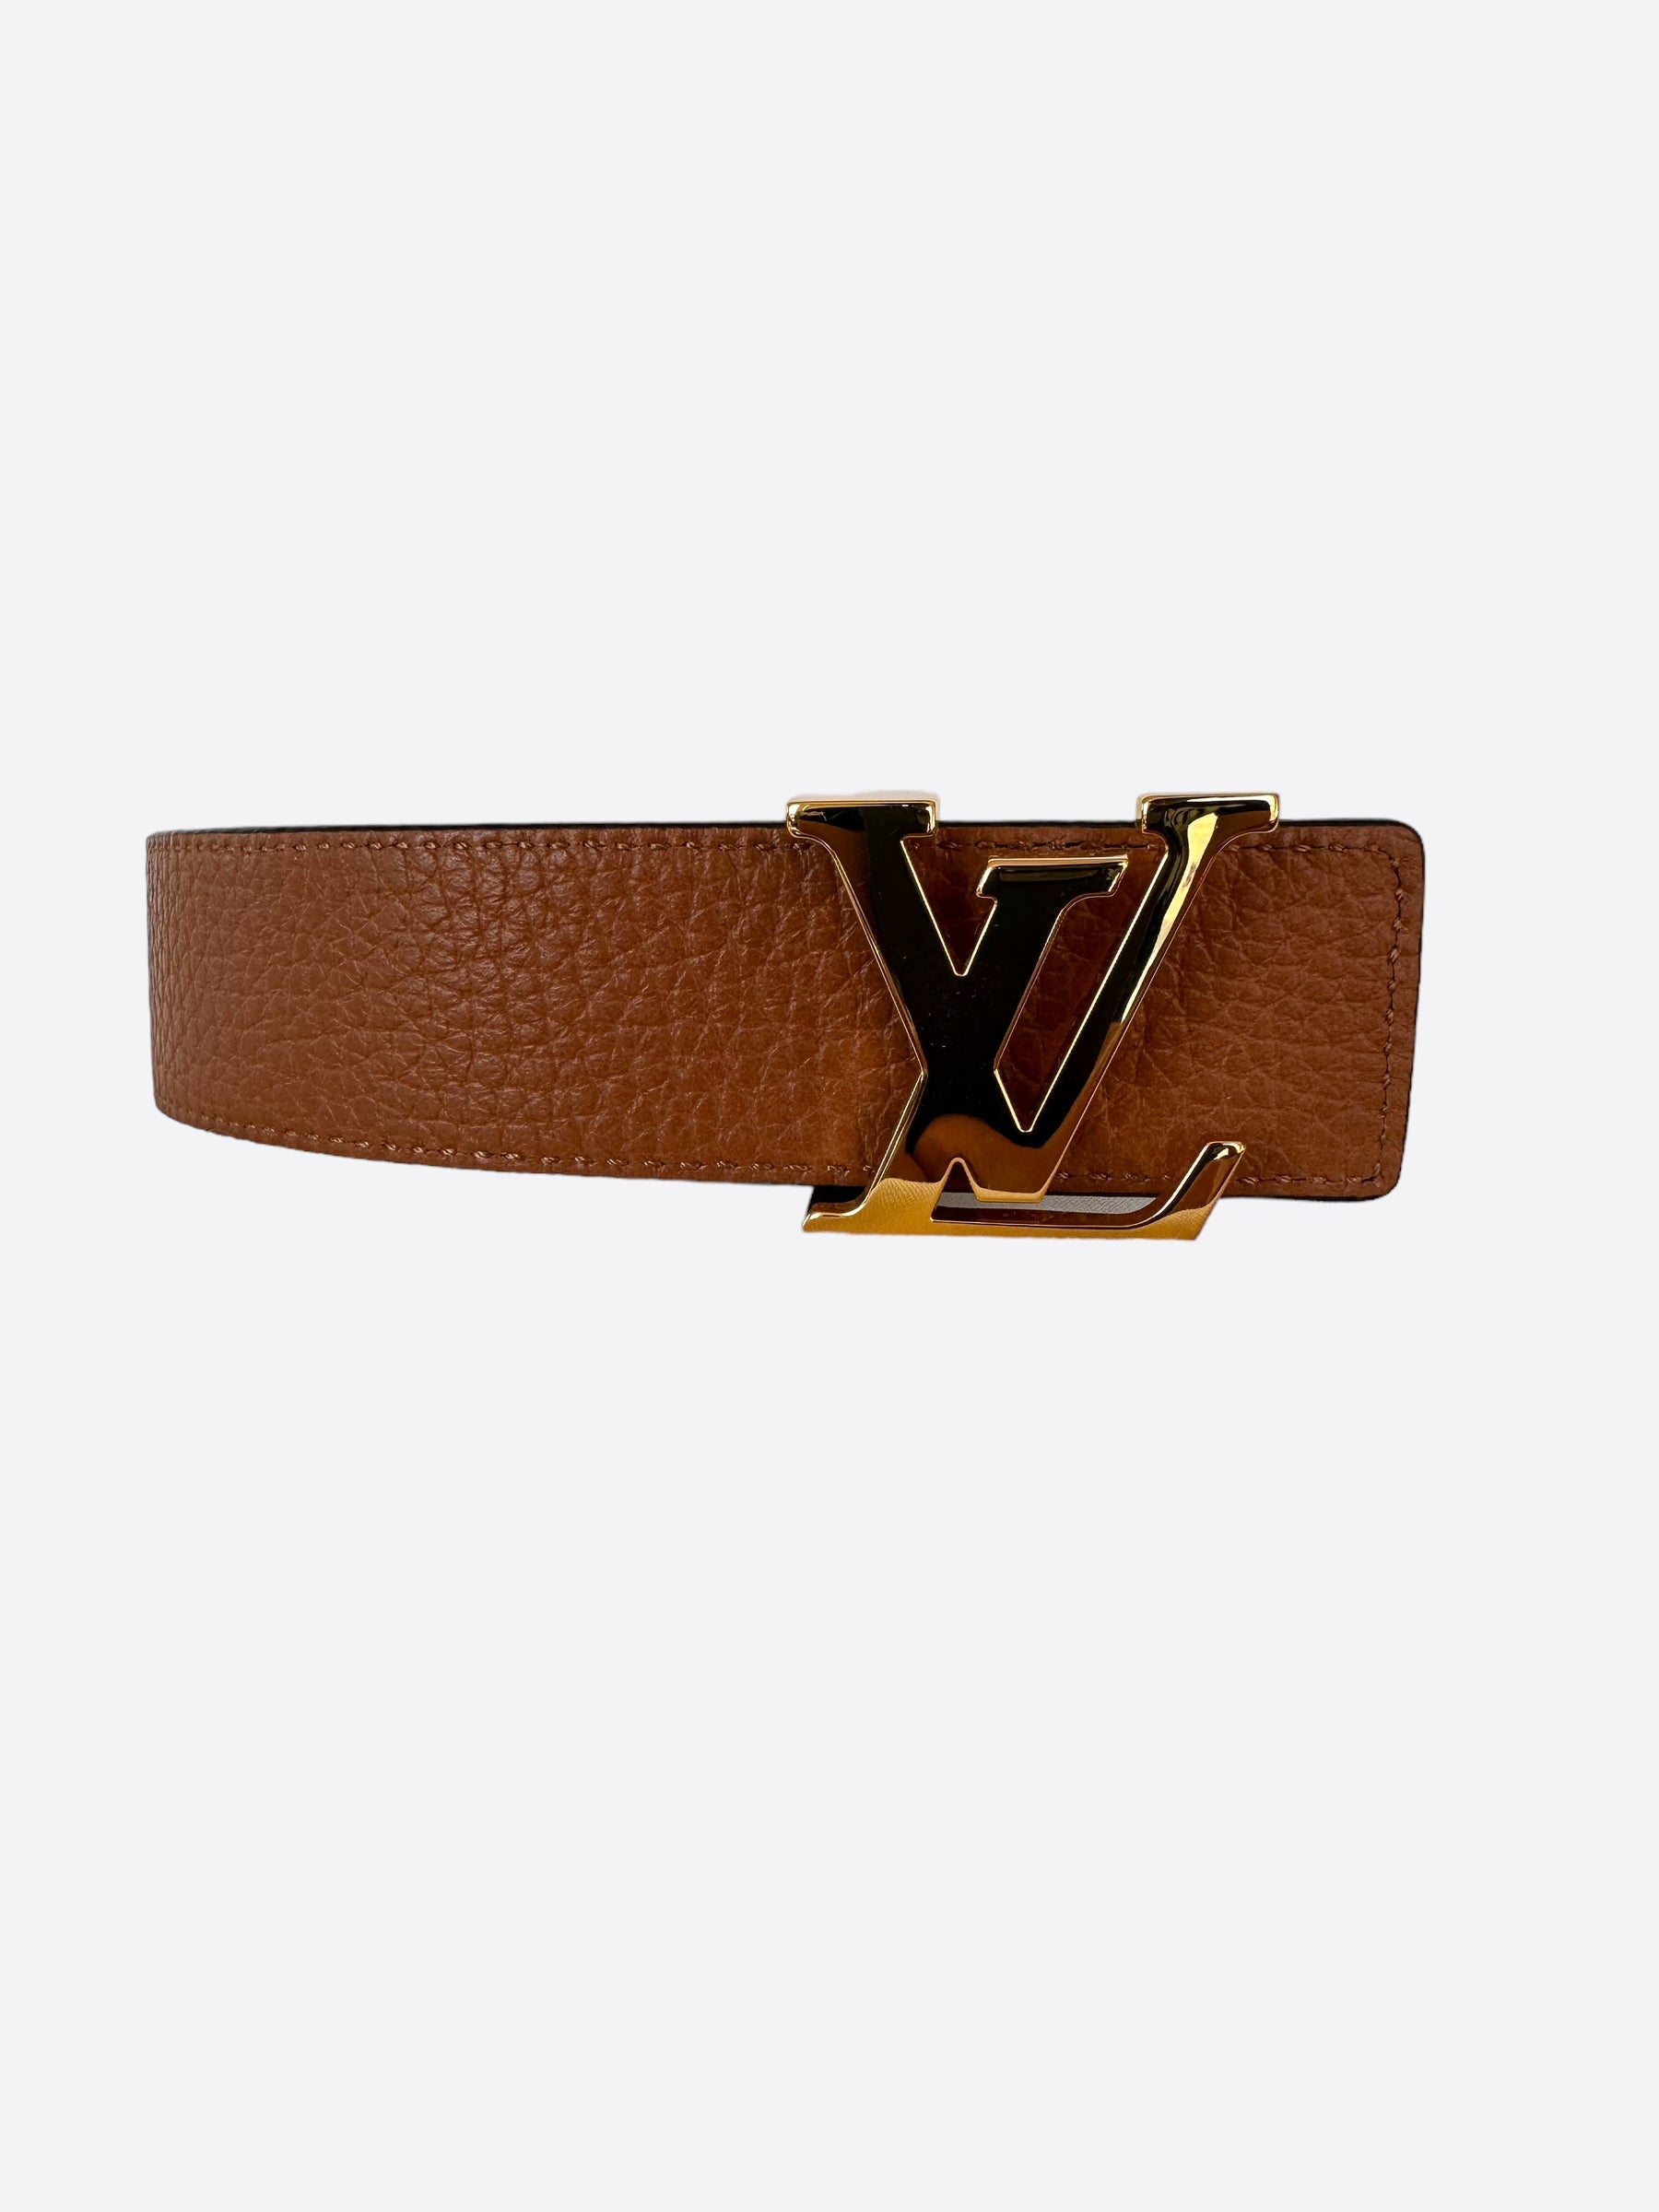 Louis Vuitton Initiales 40MM Reversible Belt 4o"